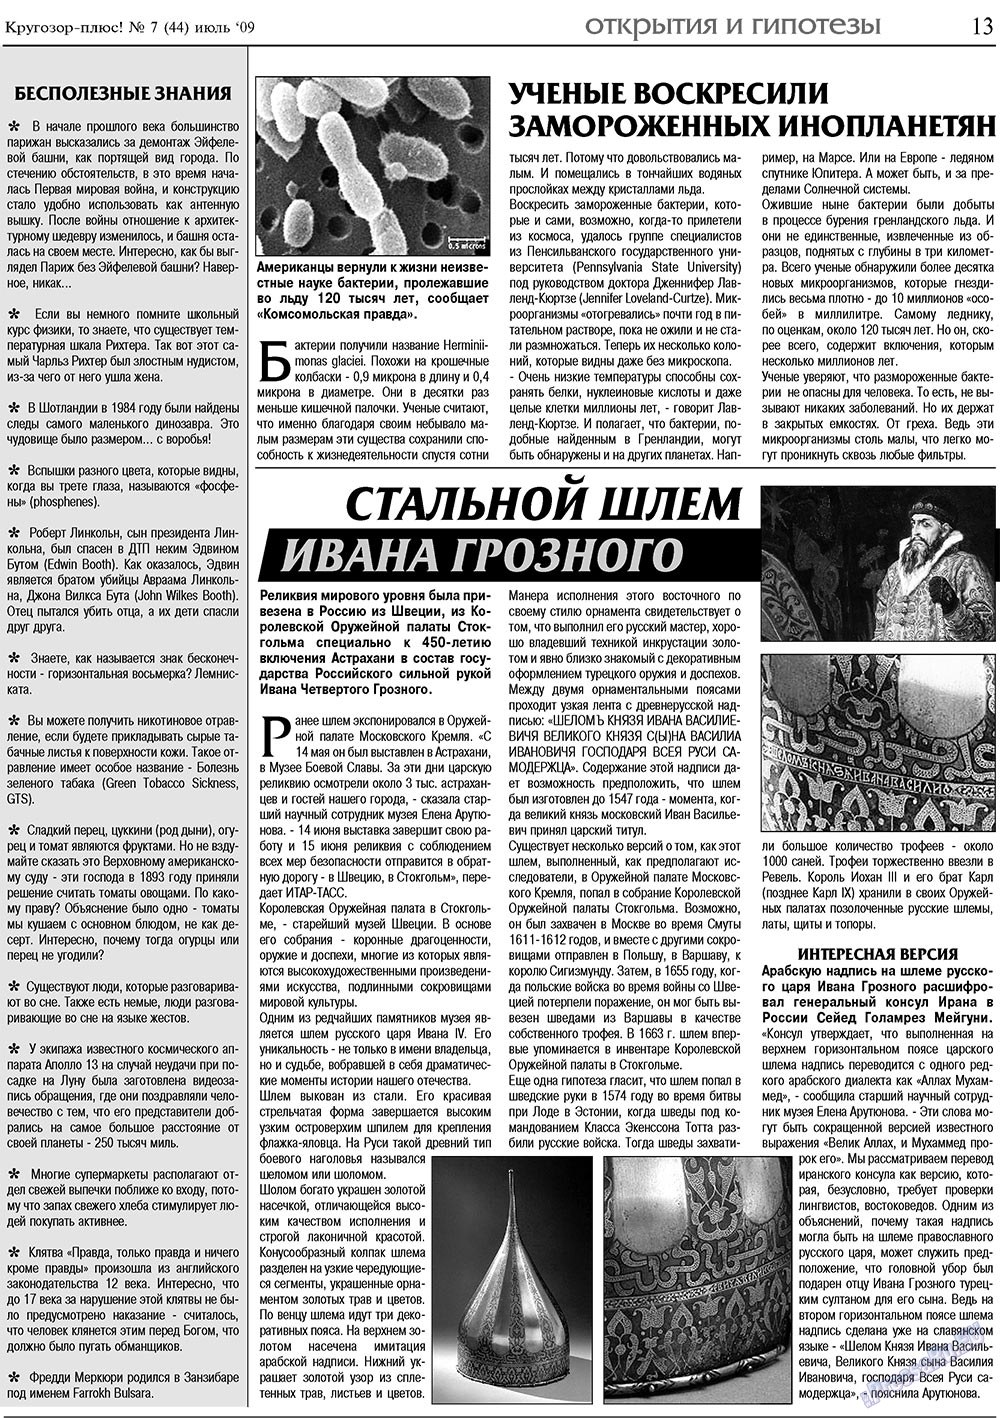 Кругозор плюс! (газета). 2009 год, номер 7, стр. 13